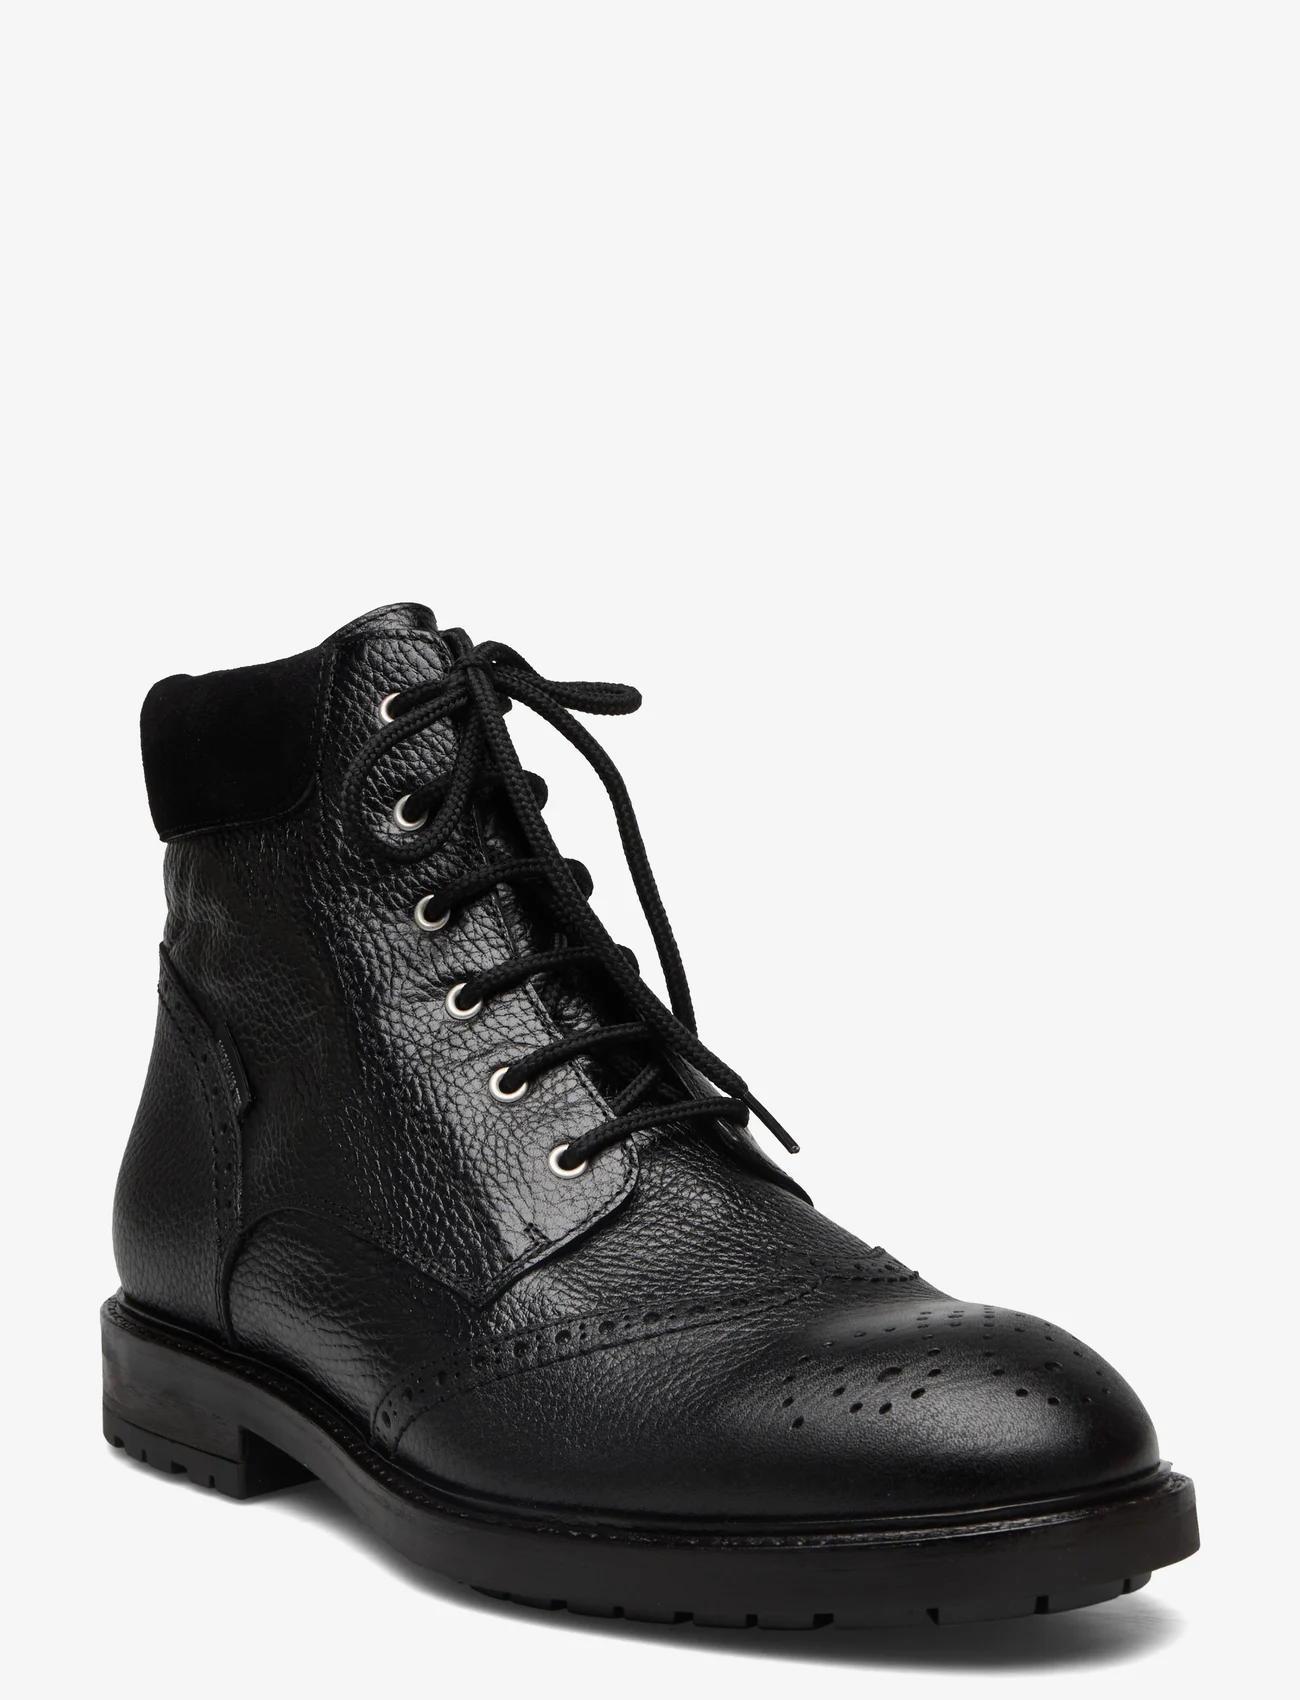 ANGULUS - Shoes - flat - with lace - schnürschuhe - 2504/1163 black/black - 0